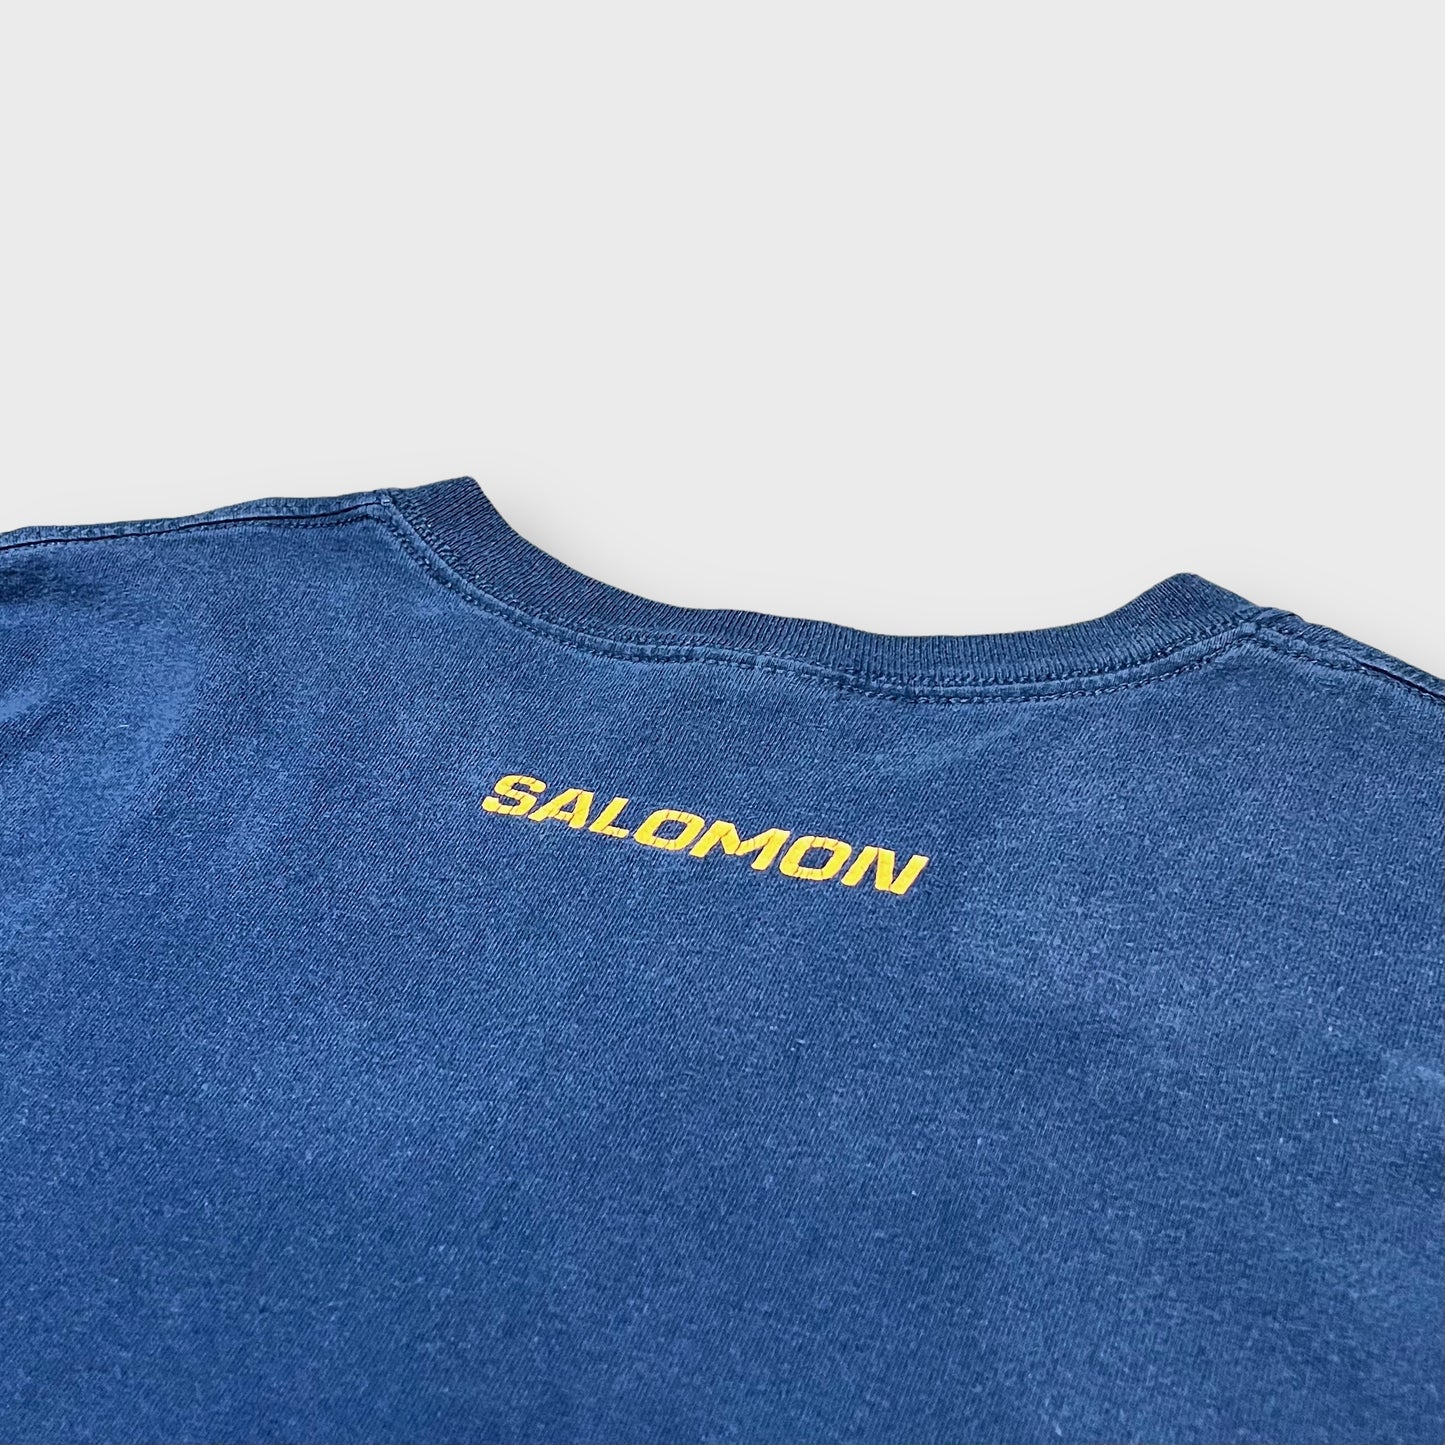 00’s “SALMON”
t-shirt